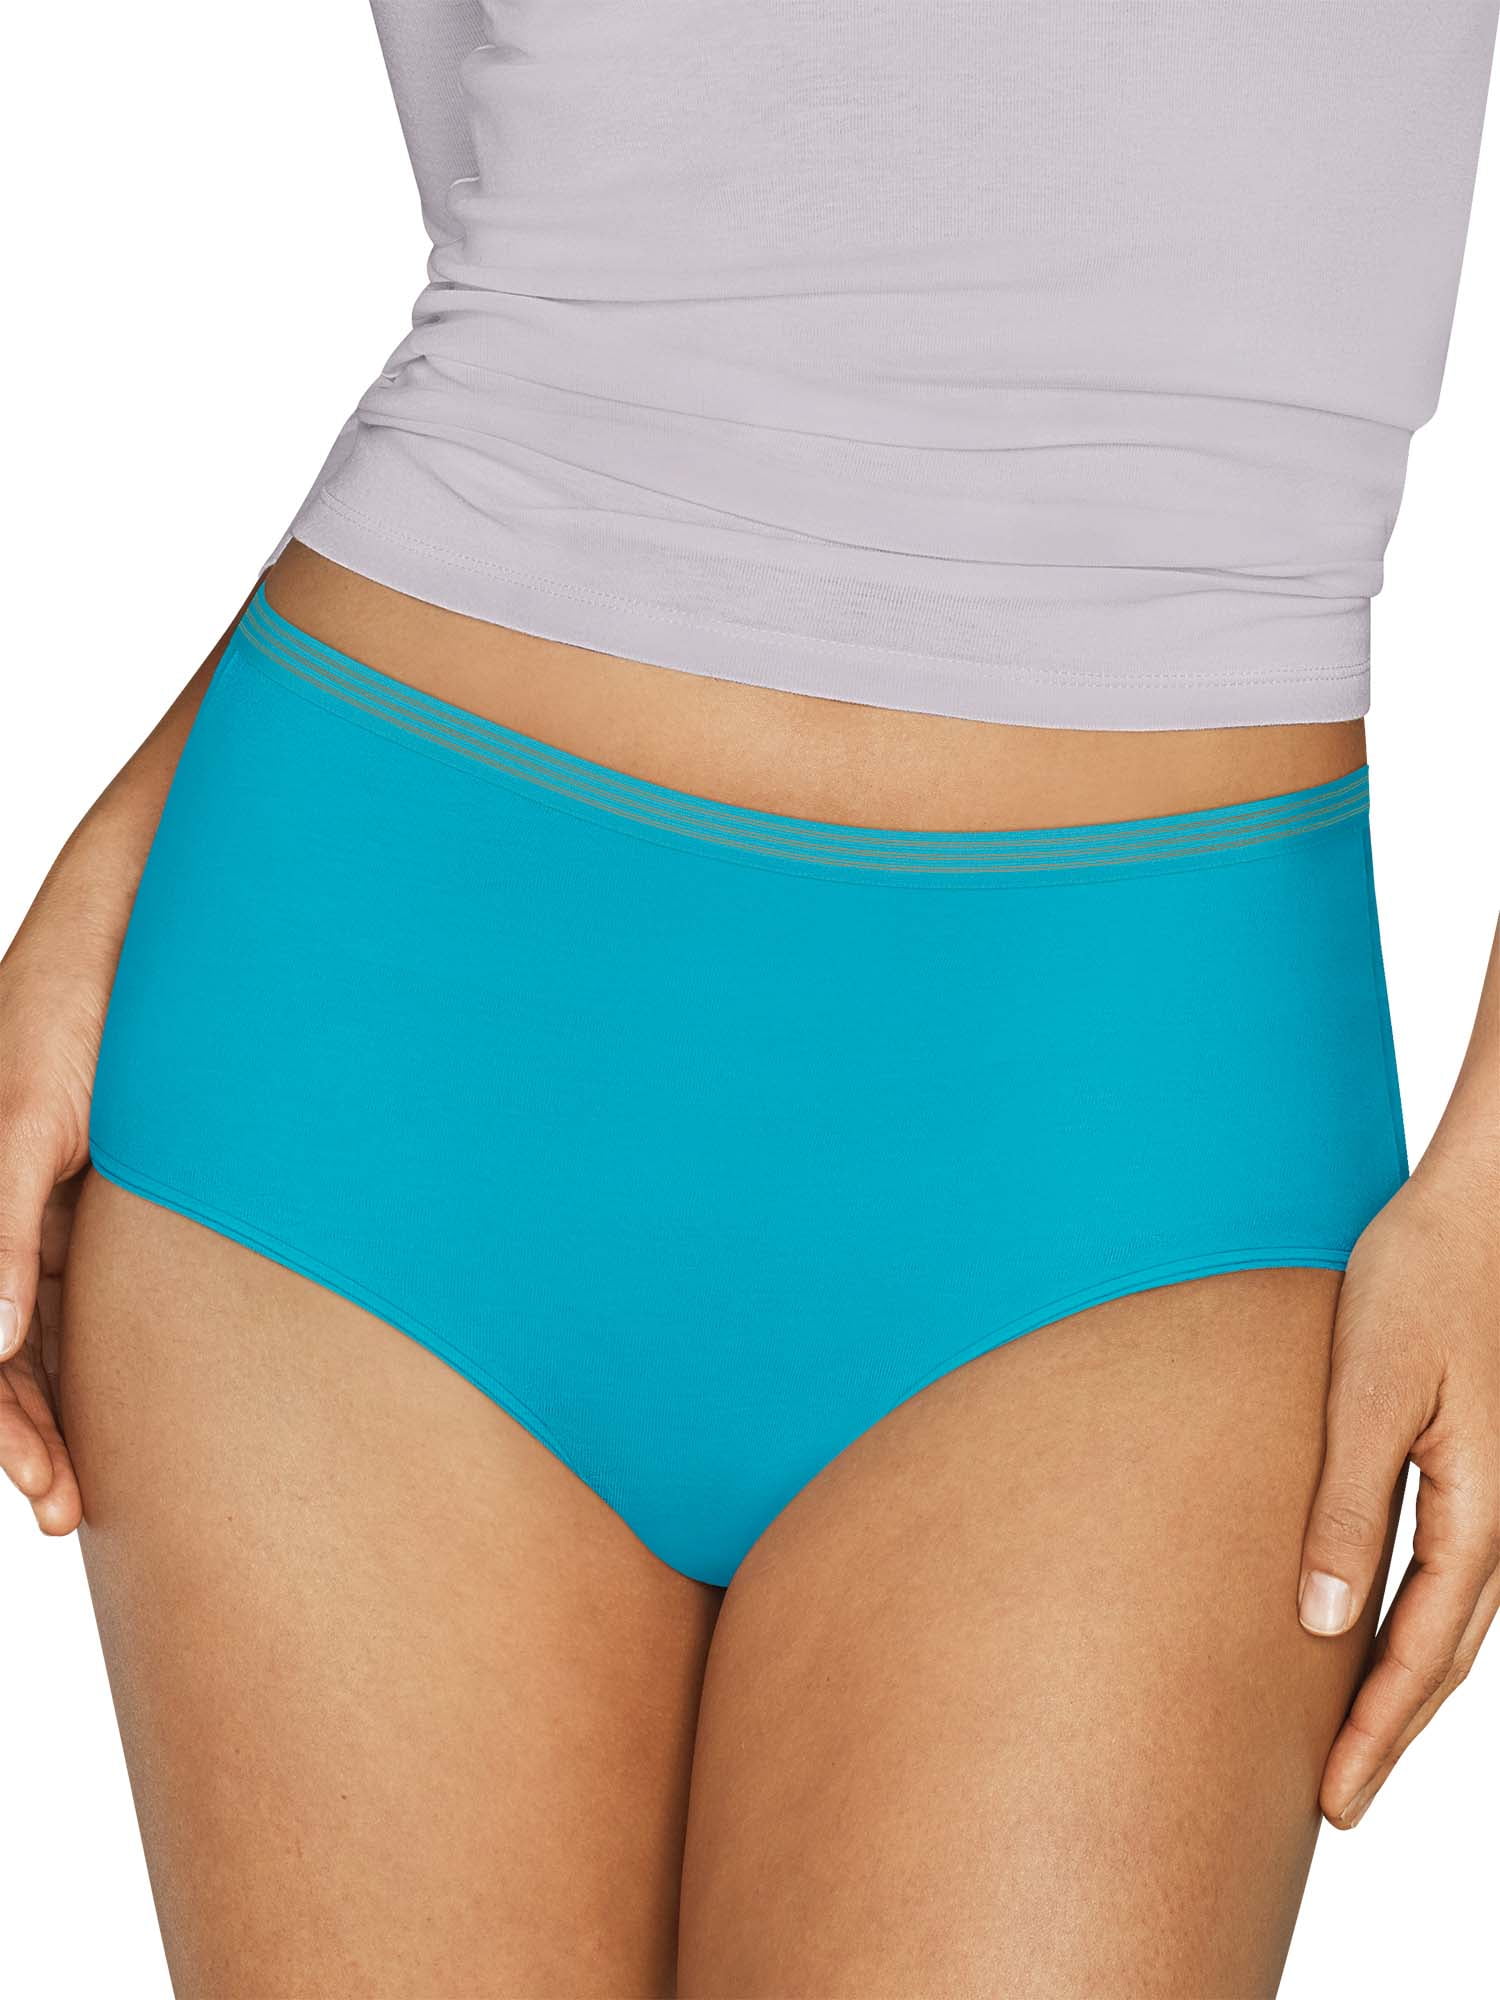 Hanes Women's Signature Smoothing Microfiber Brief Underwear, 6-Pack 